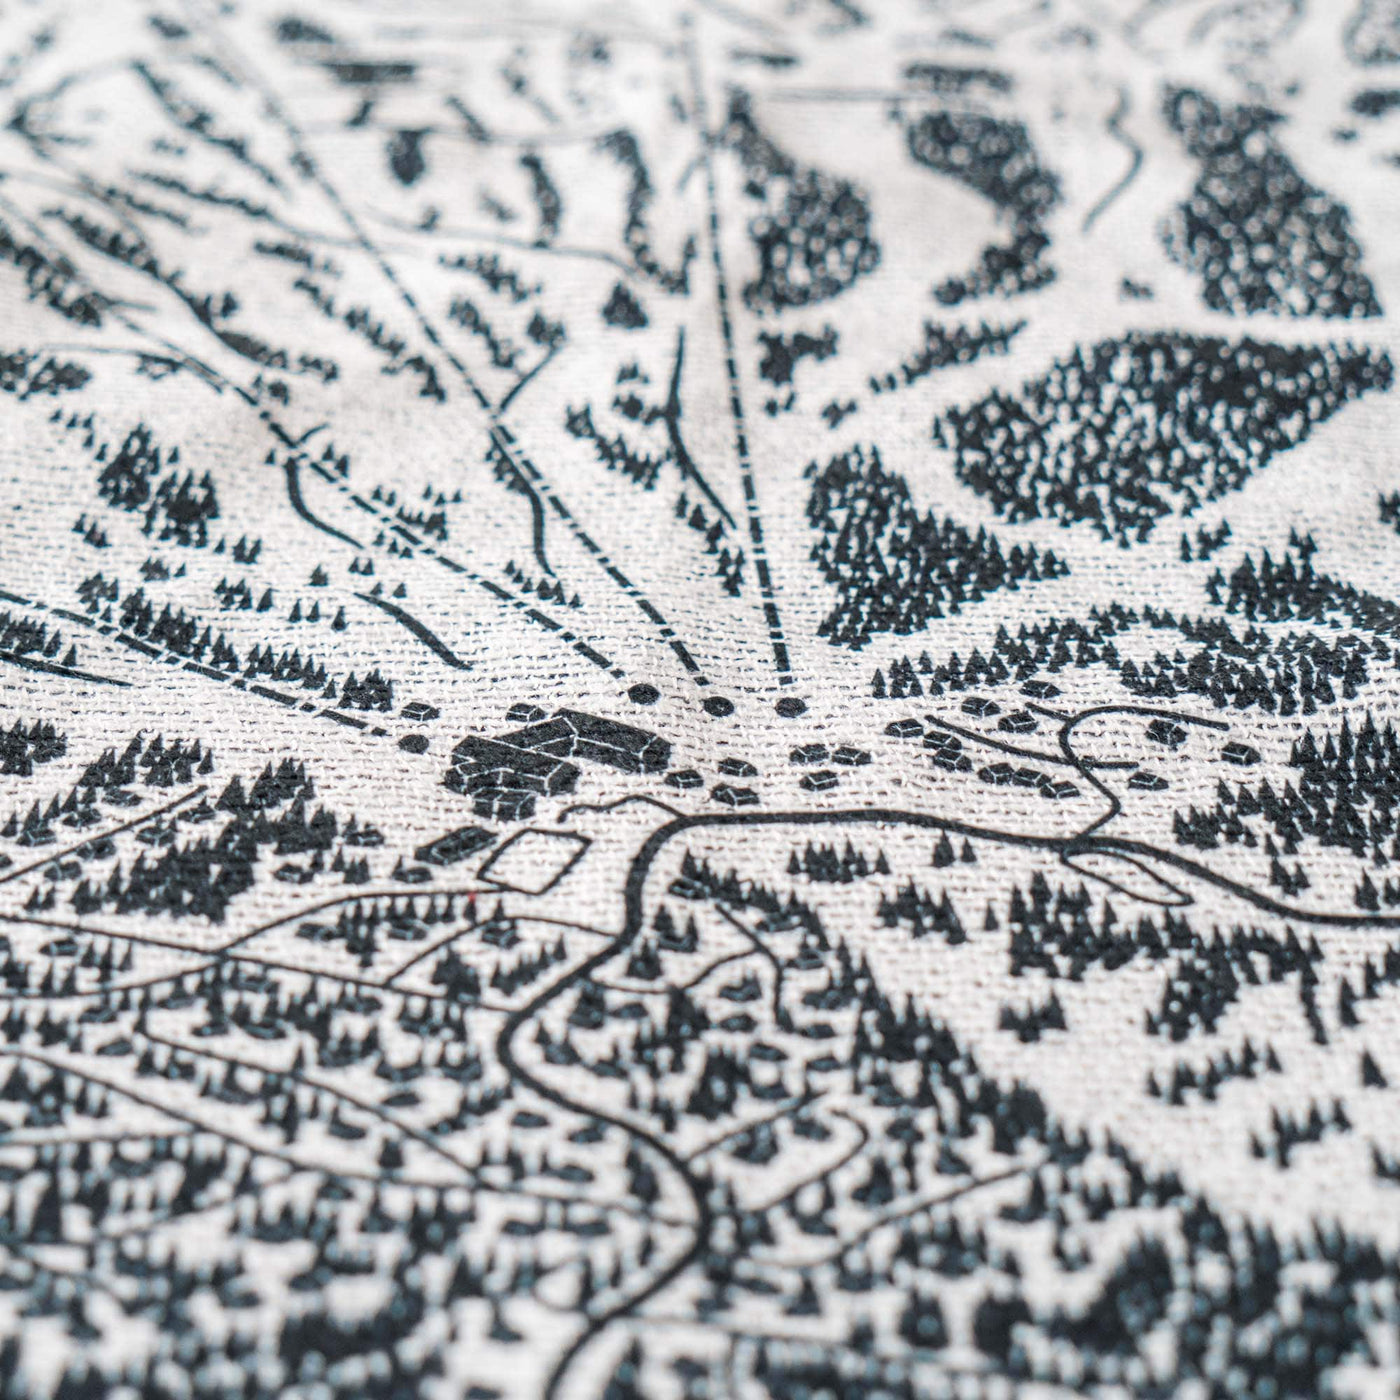 Sun Peaks, British Columbia Ski Trail Map Blankets